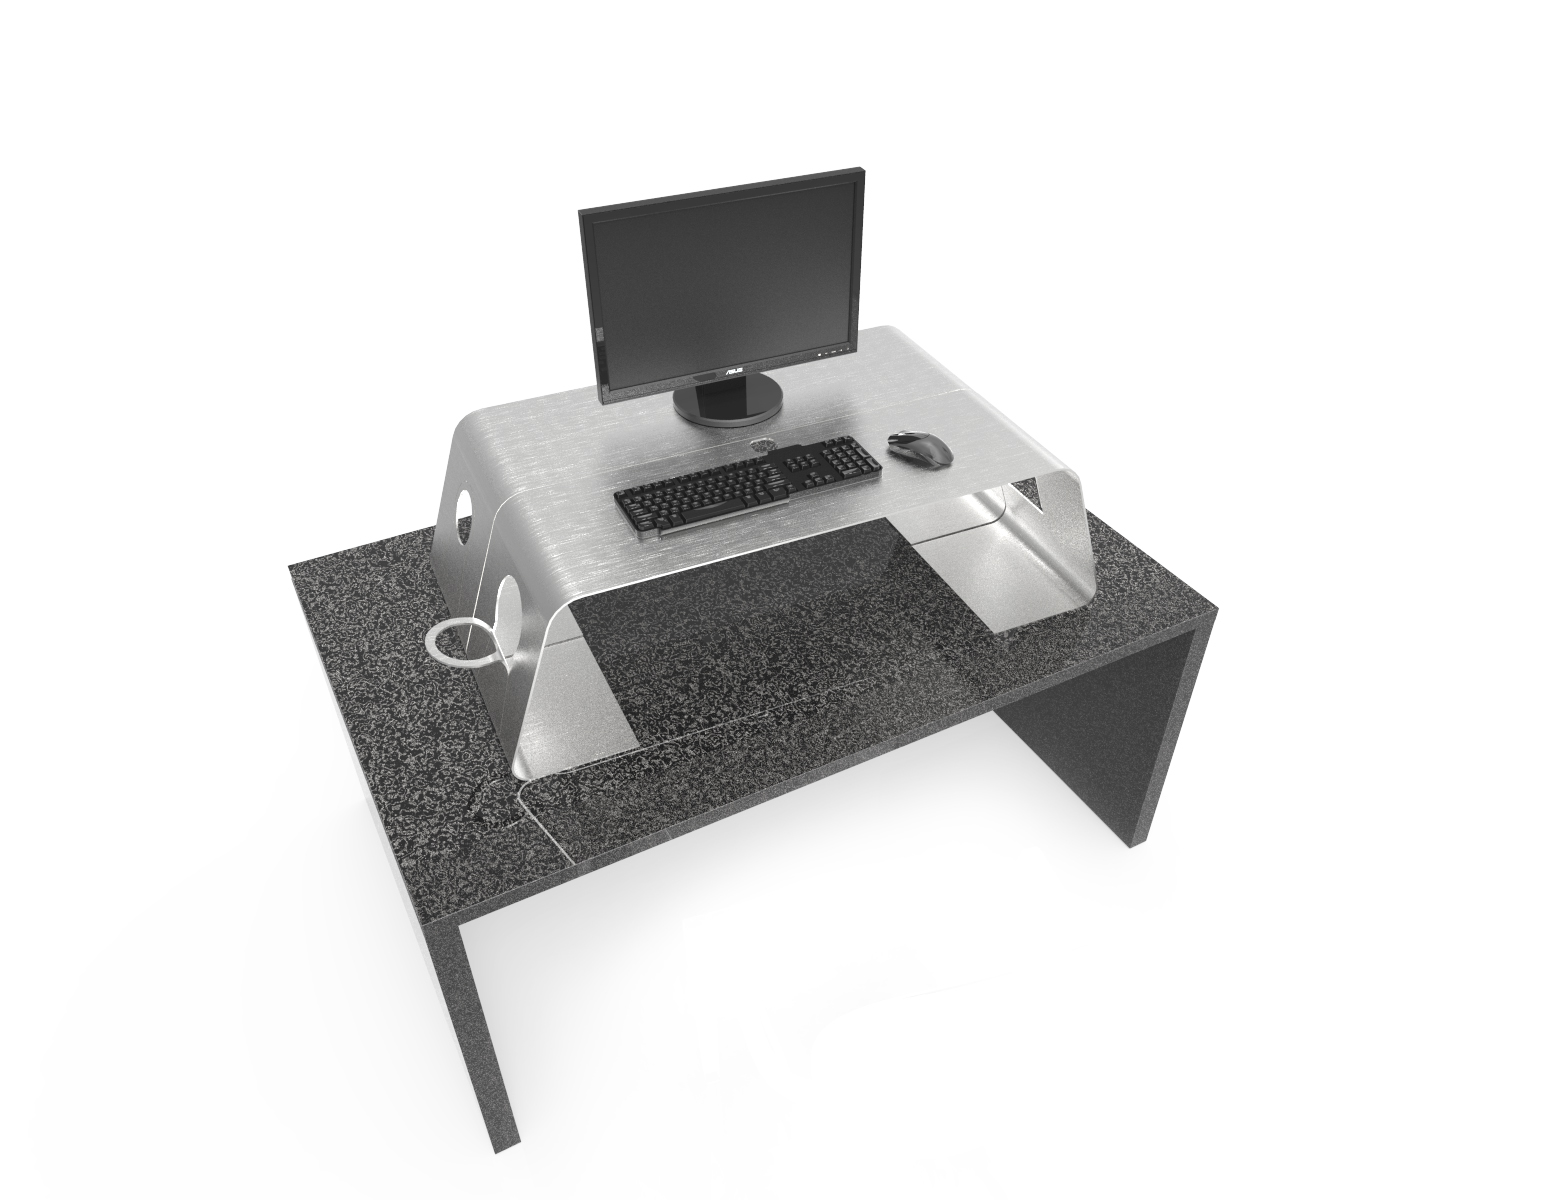 Bent Metal Desktop Riser Concept